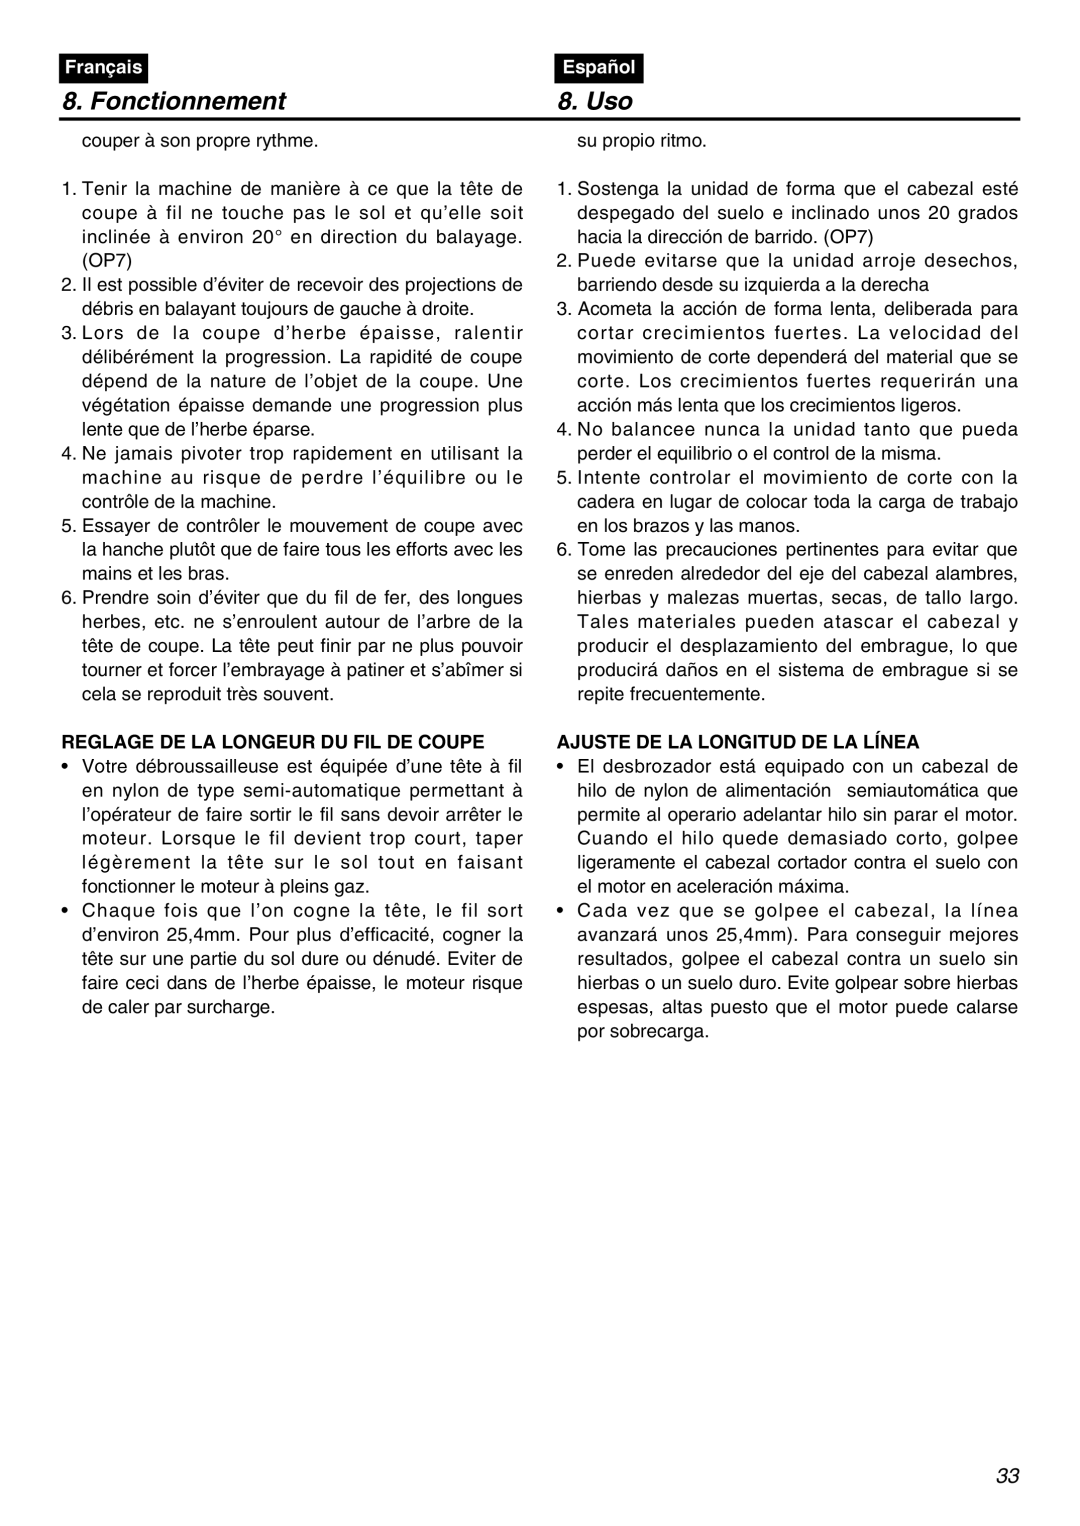 RedMax BCZ3001S-CA, BCZ3001SW-CA manual Reglage DE LA Longeur DU FIL DE Coupe, Ajuste DE LA Longitud DE LA Línea 